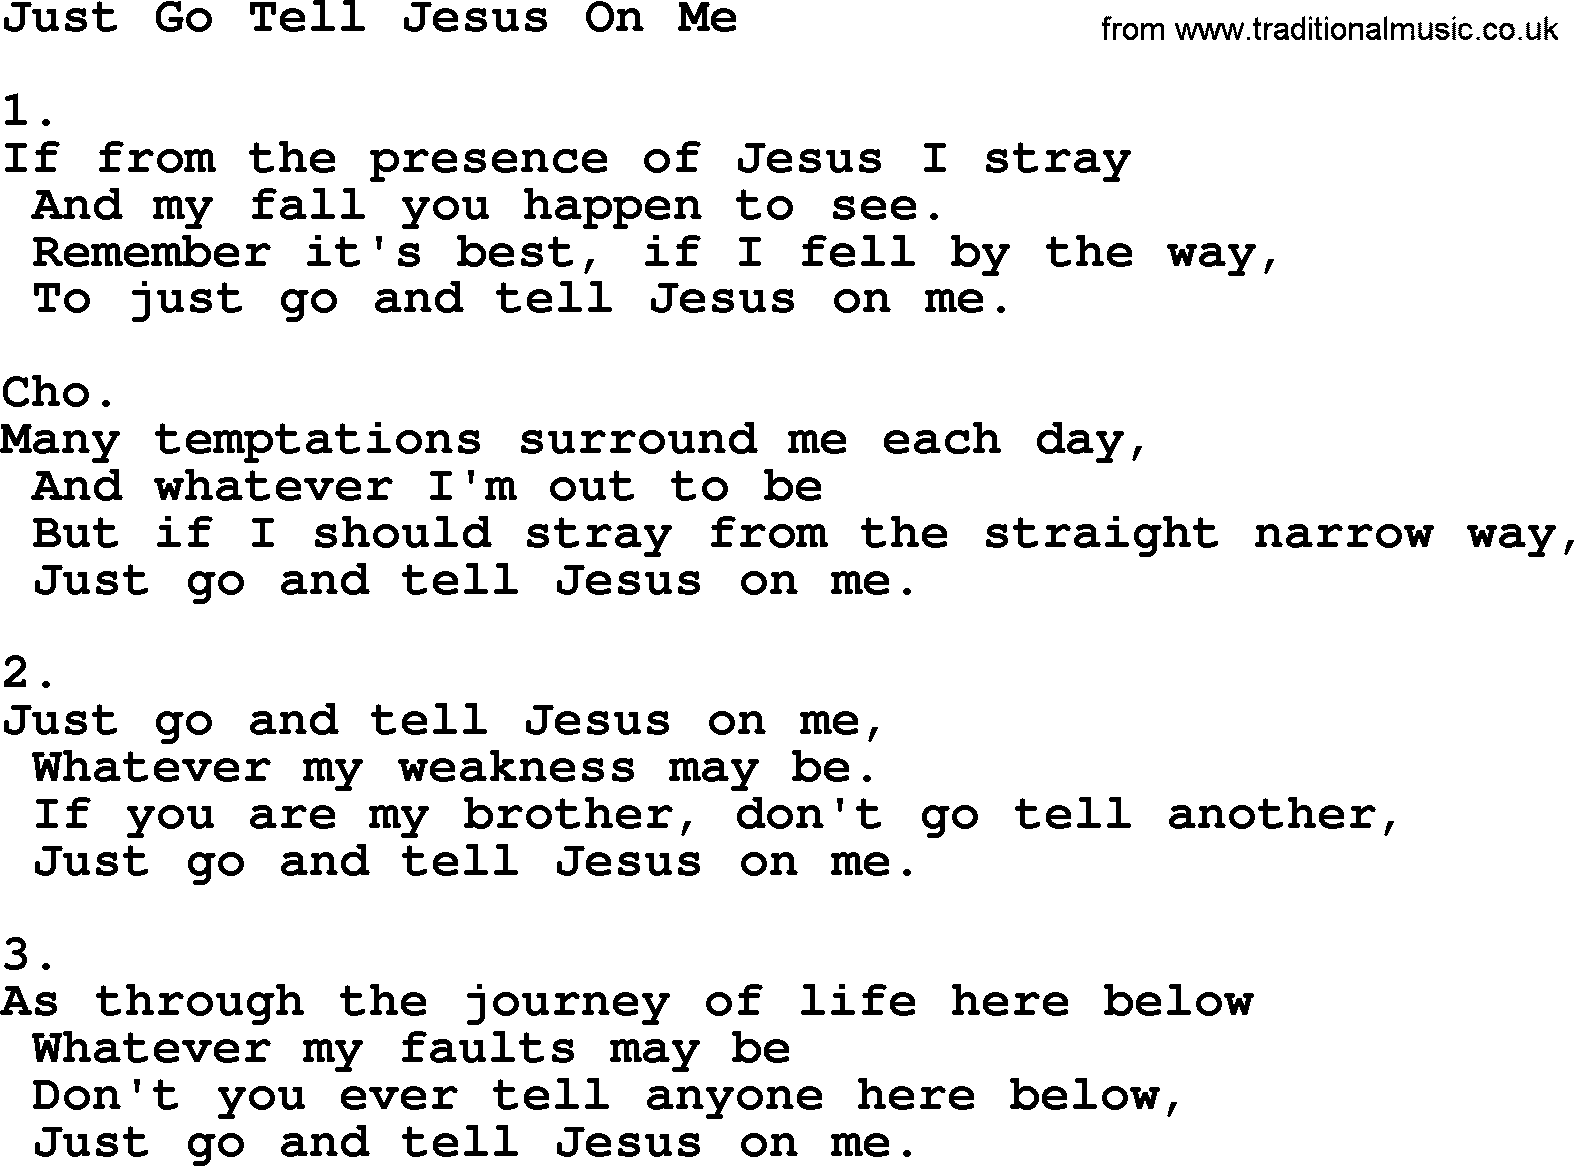 Apostolic & Pentecostal Hymns and Songs, Hymn: Just Go Tell Jesus On Me lyrics and PDF